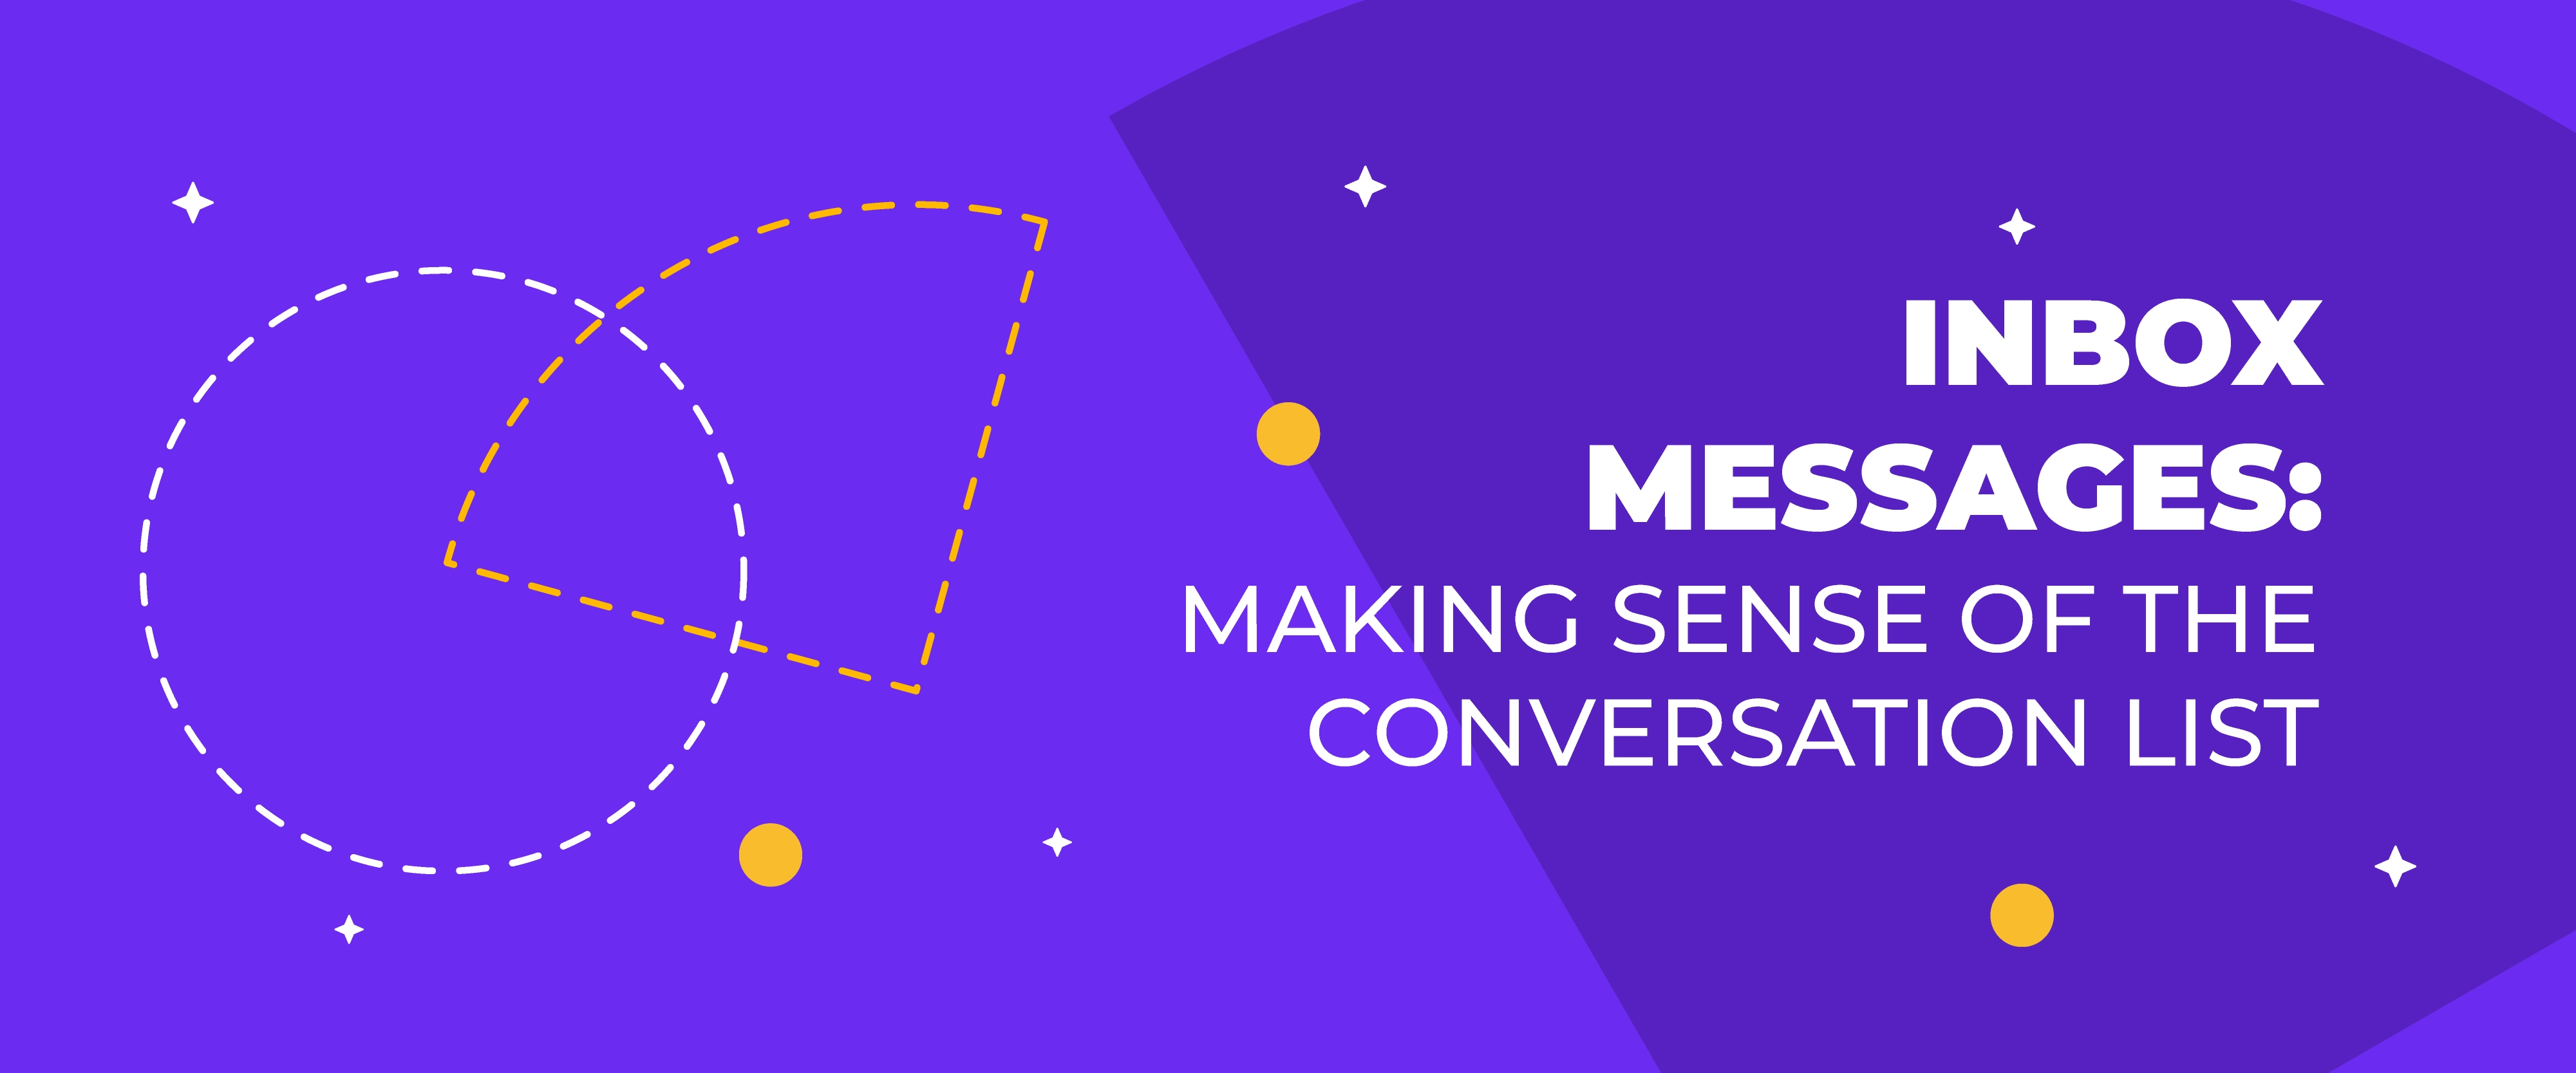 Inbox: Making Sense of the Conversation List